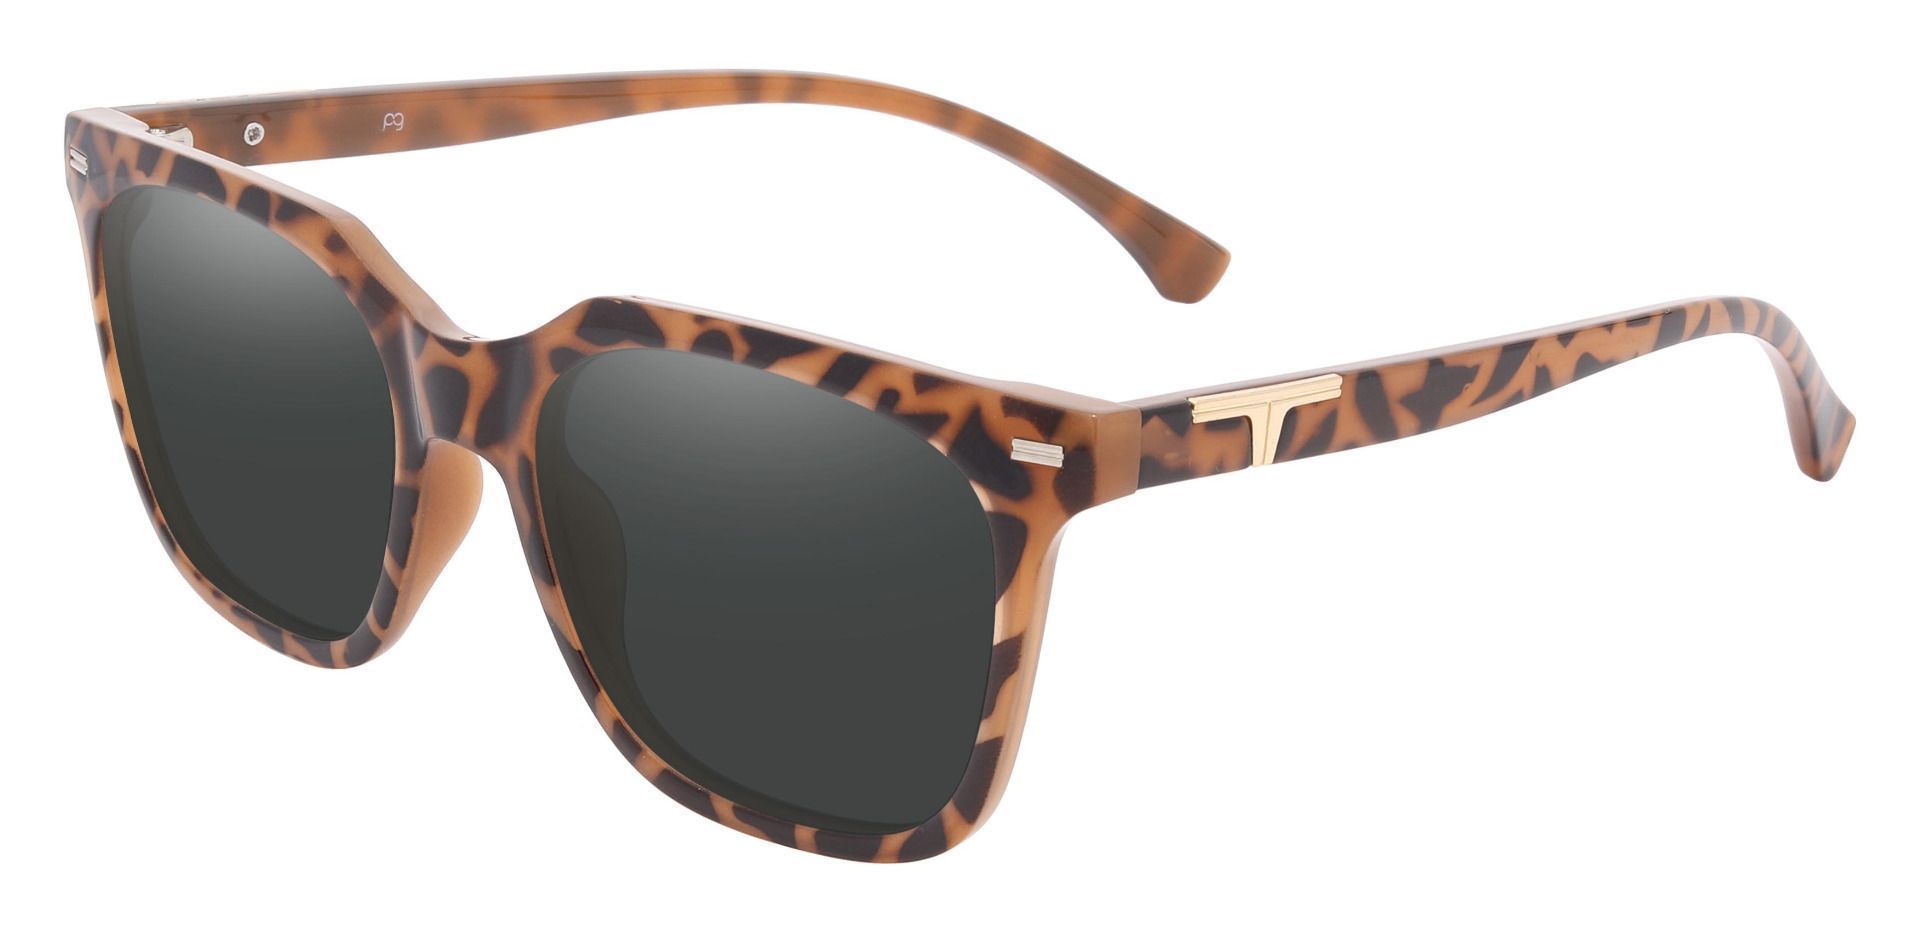 Klein Square Prescription Sunglasses - Tortoise Frame With Gray Lenses